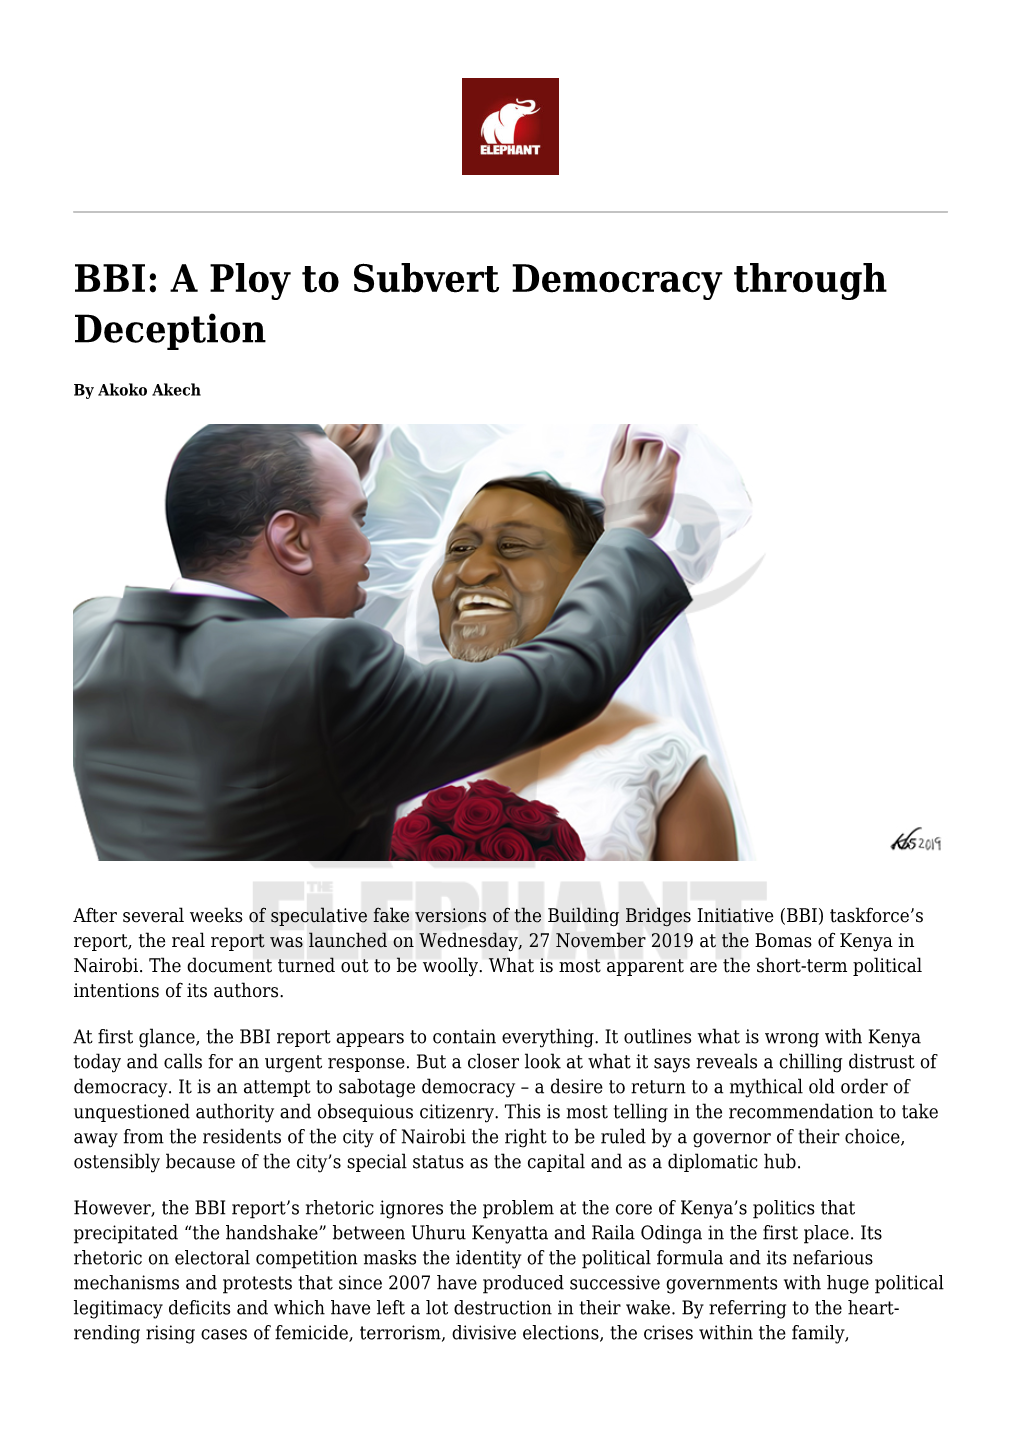 BBI: a Ploy to Subvert Democracy Through Deception